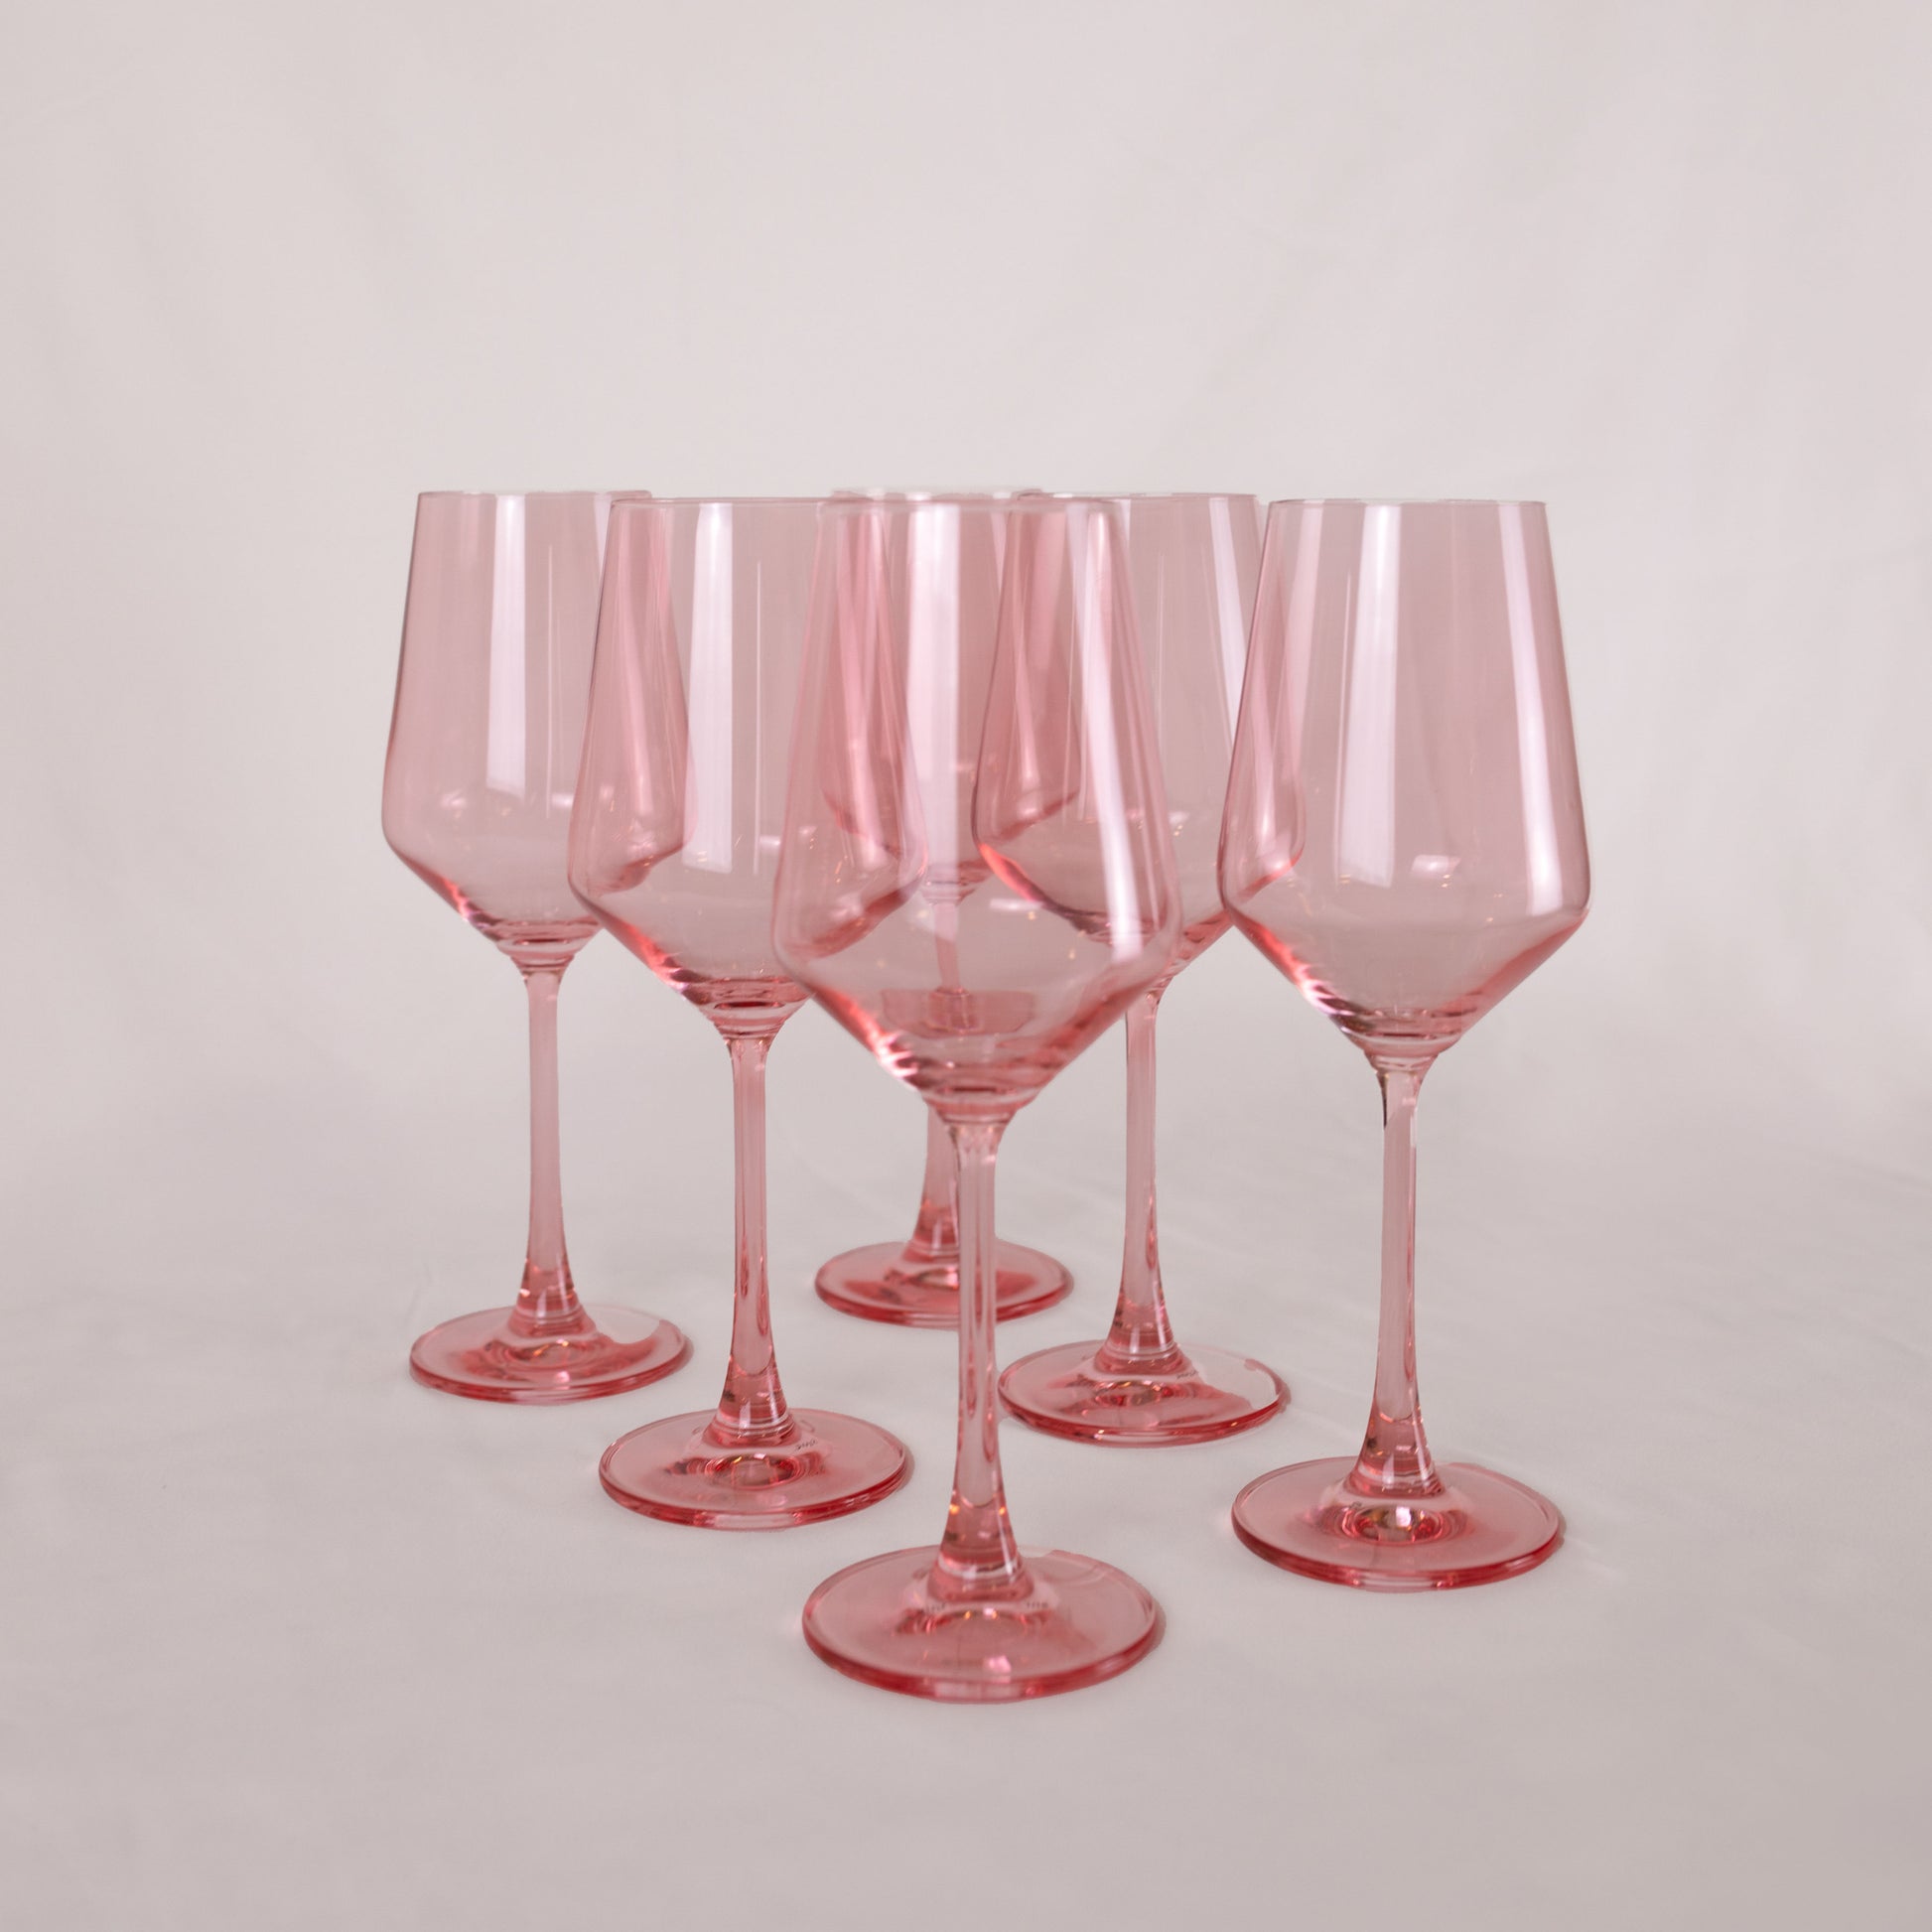 Pastel pink wine glasses - set of 6